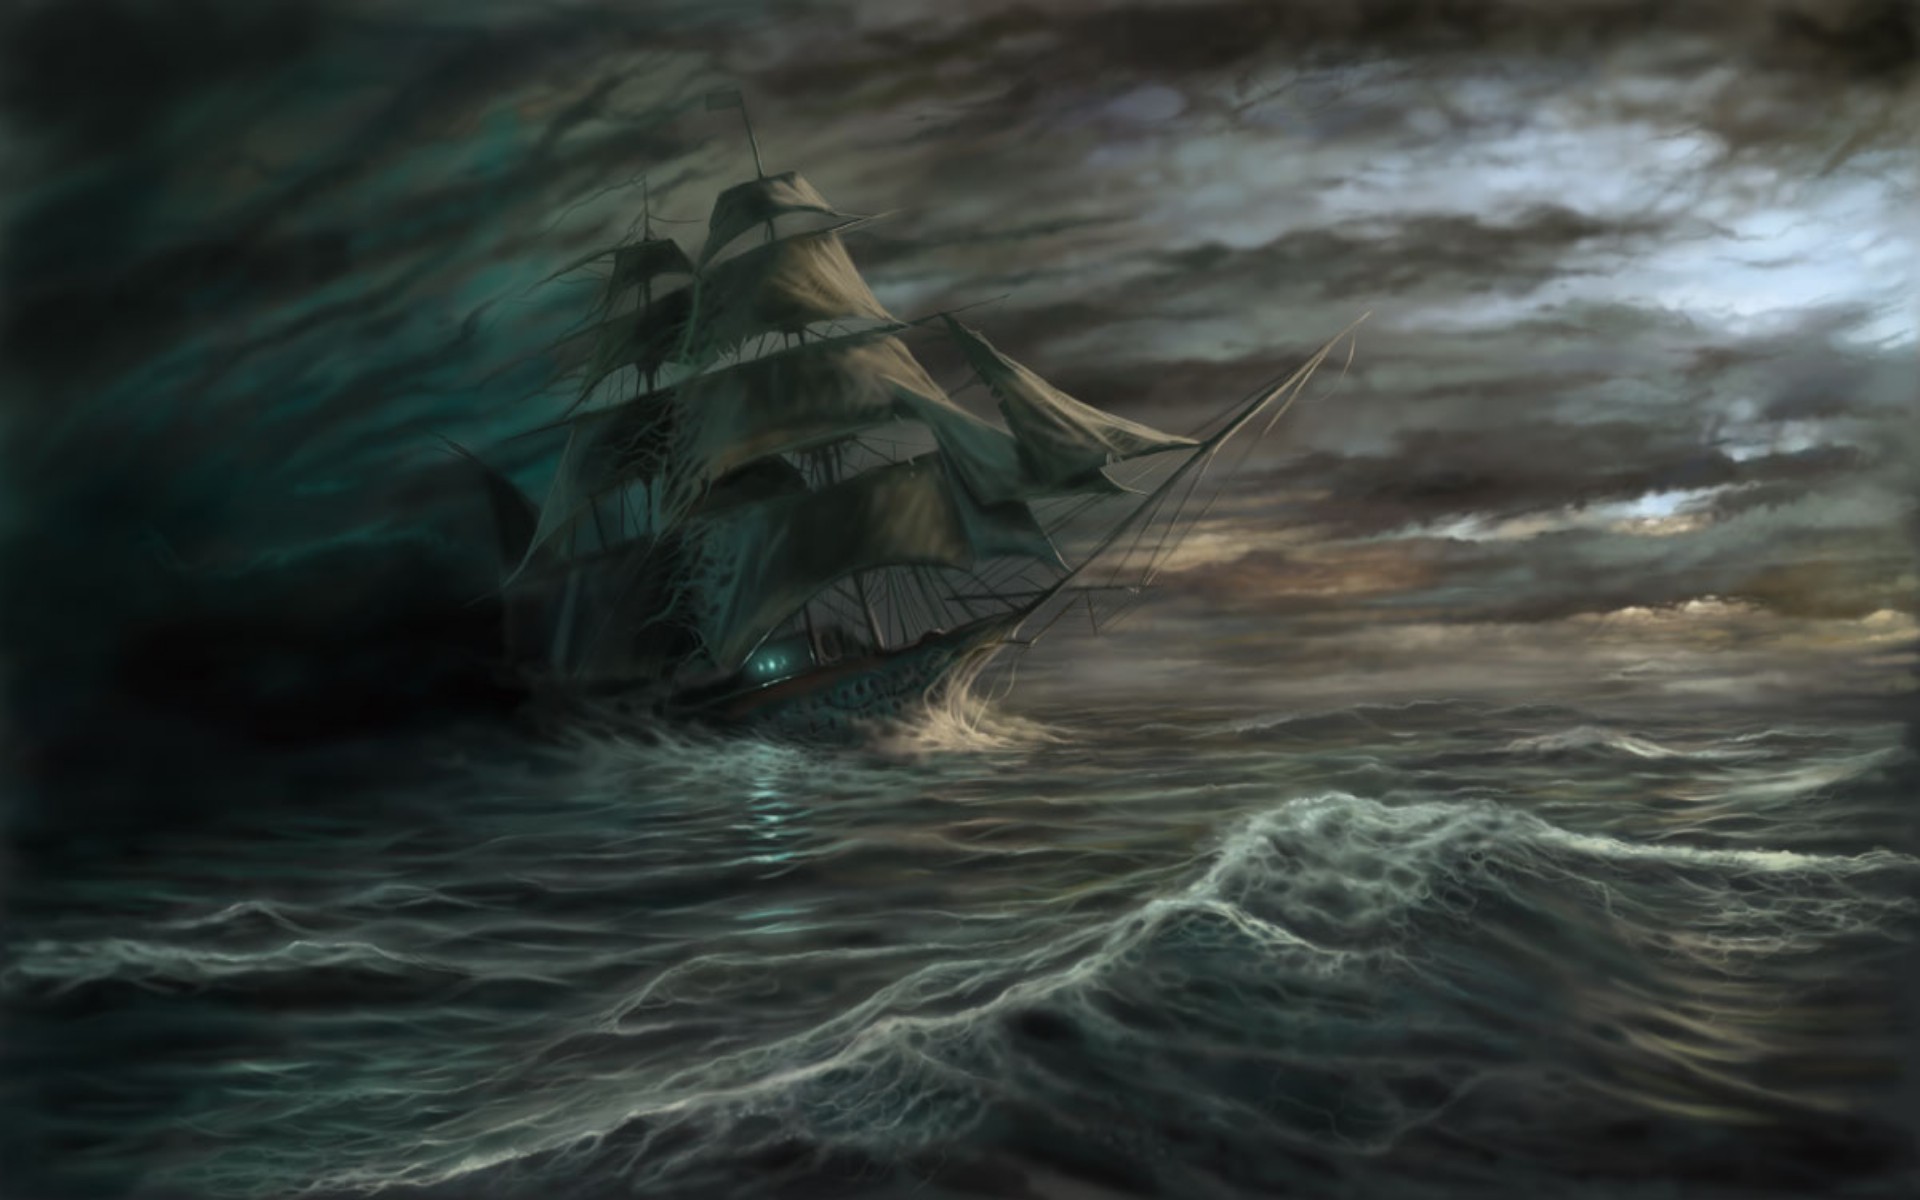 dark ship by dark,ship,gothic,water,sea,ocean